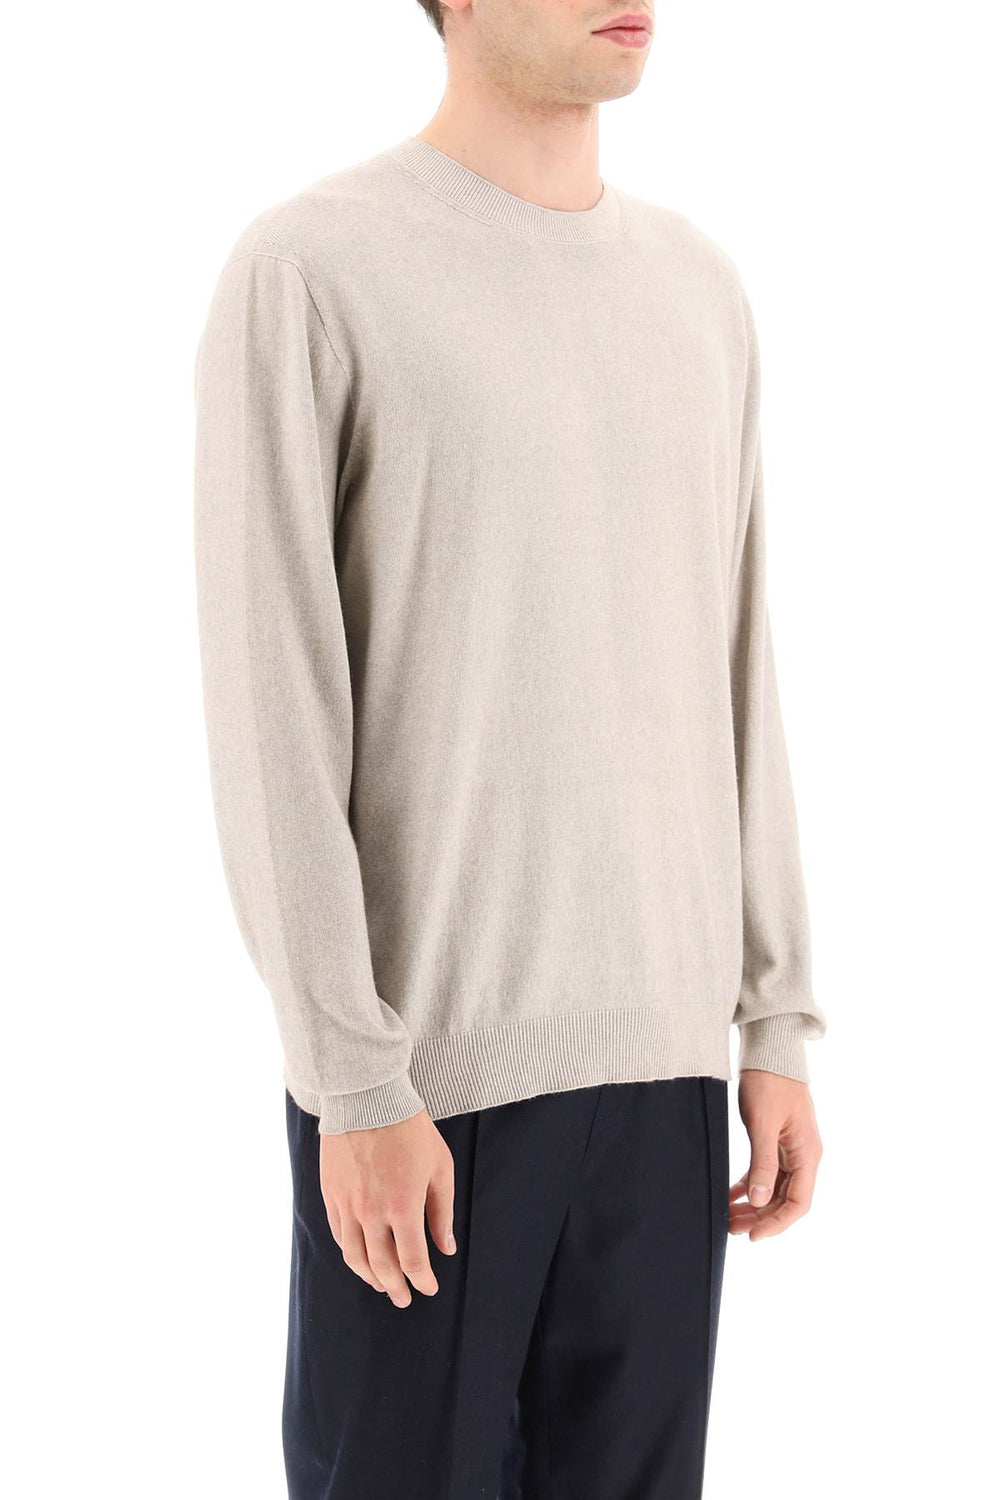 Agnona cotton and cashmere sweater-1